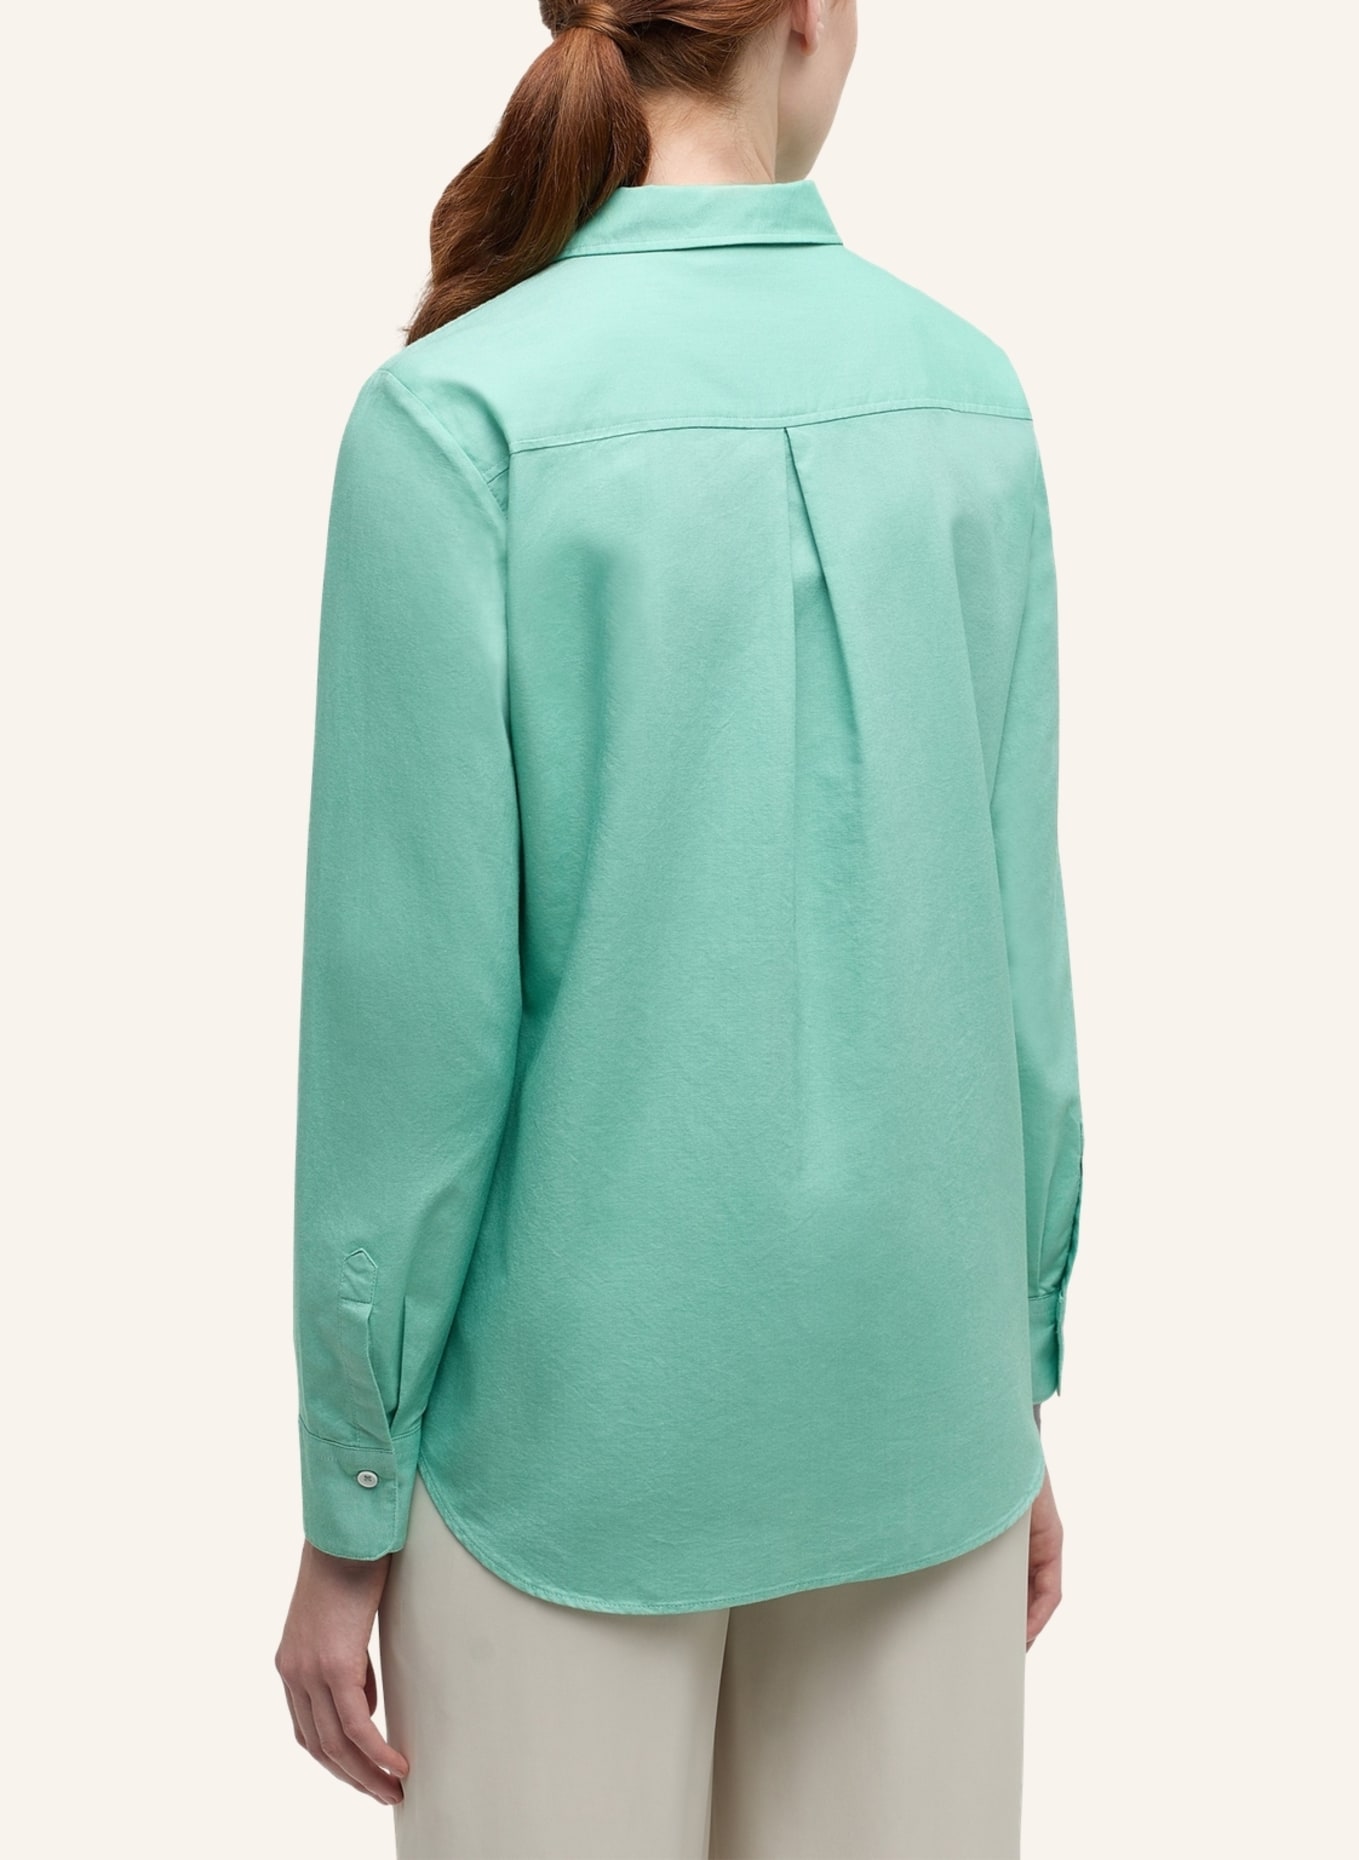 grün FIT ETERNA Bluse REGULAR in